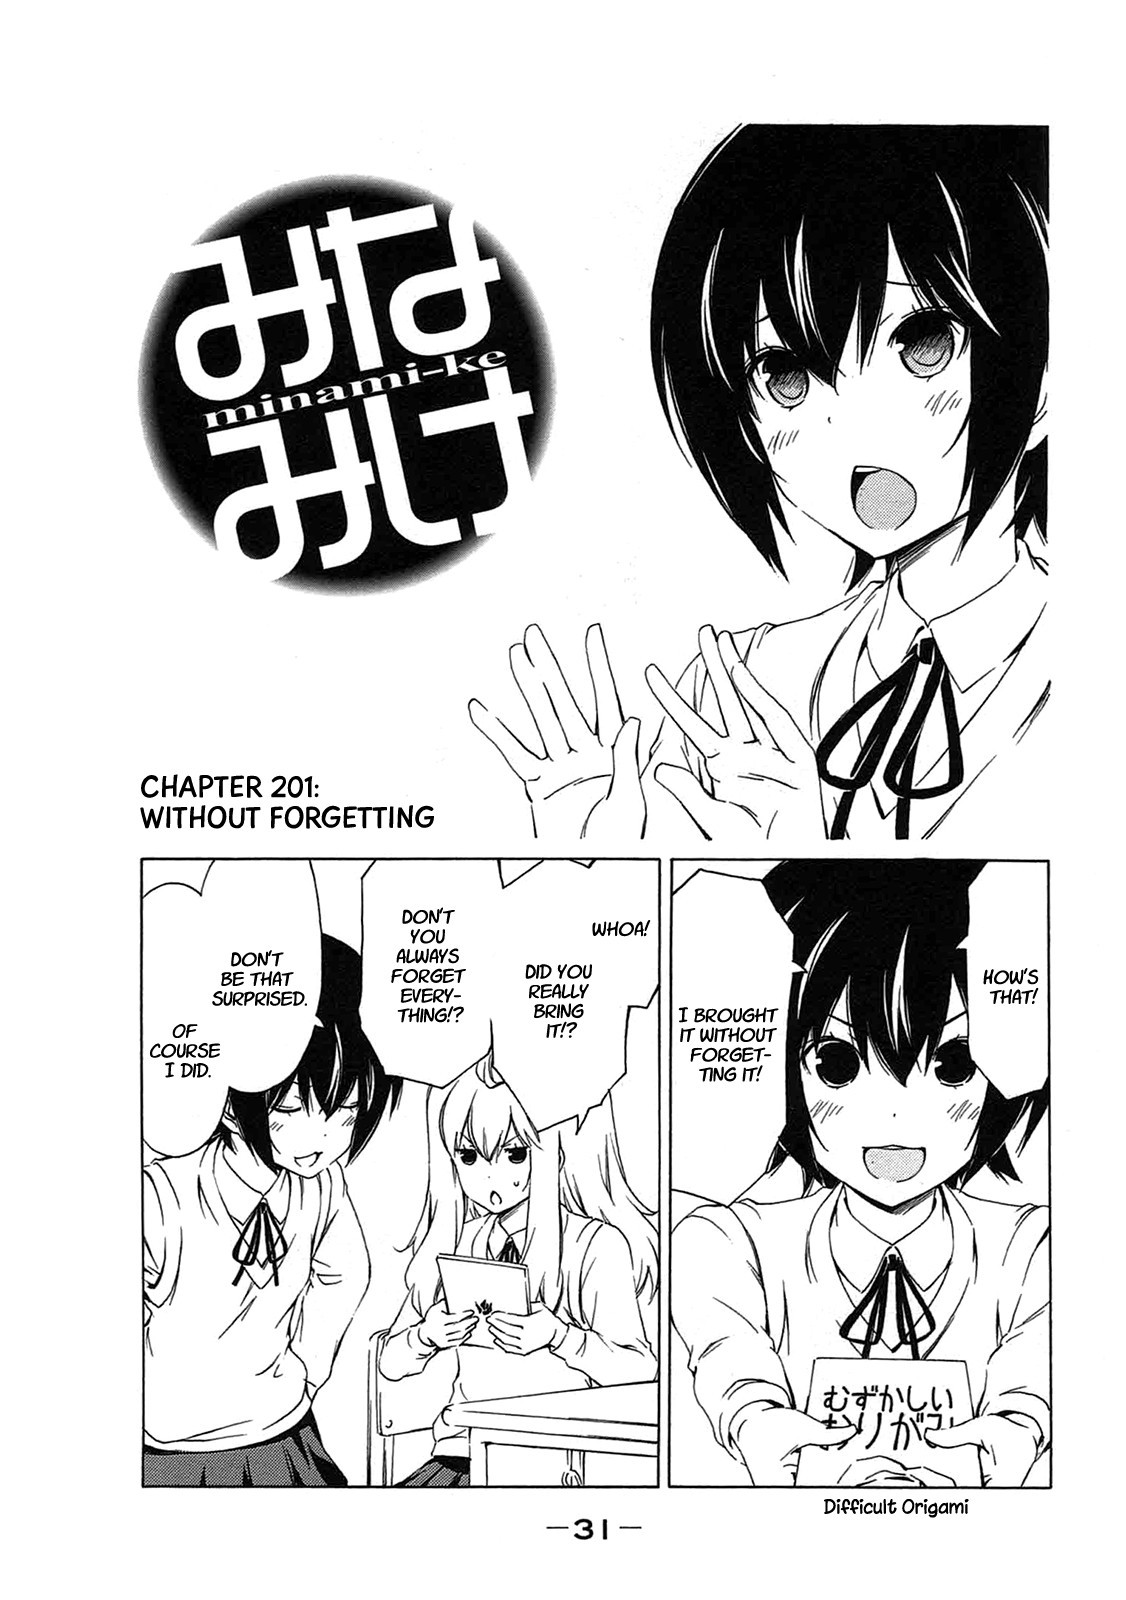 Minami-ke chapter 201 page 1